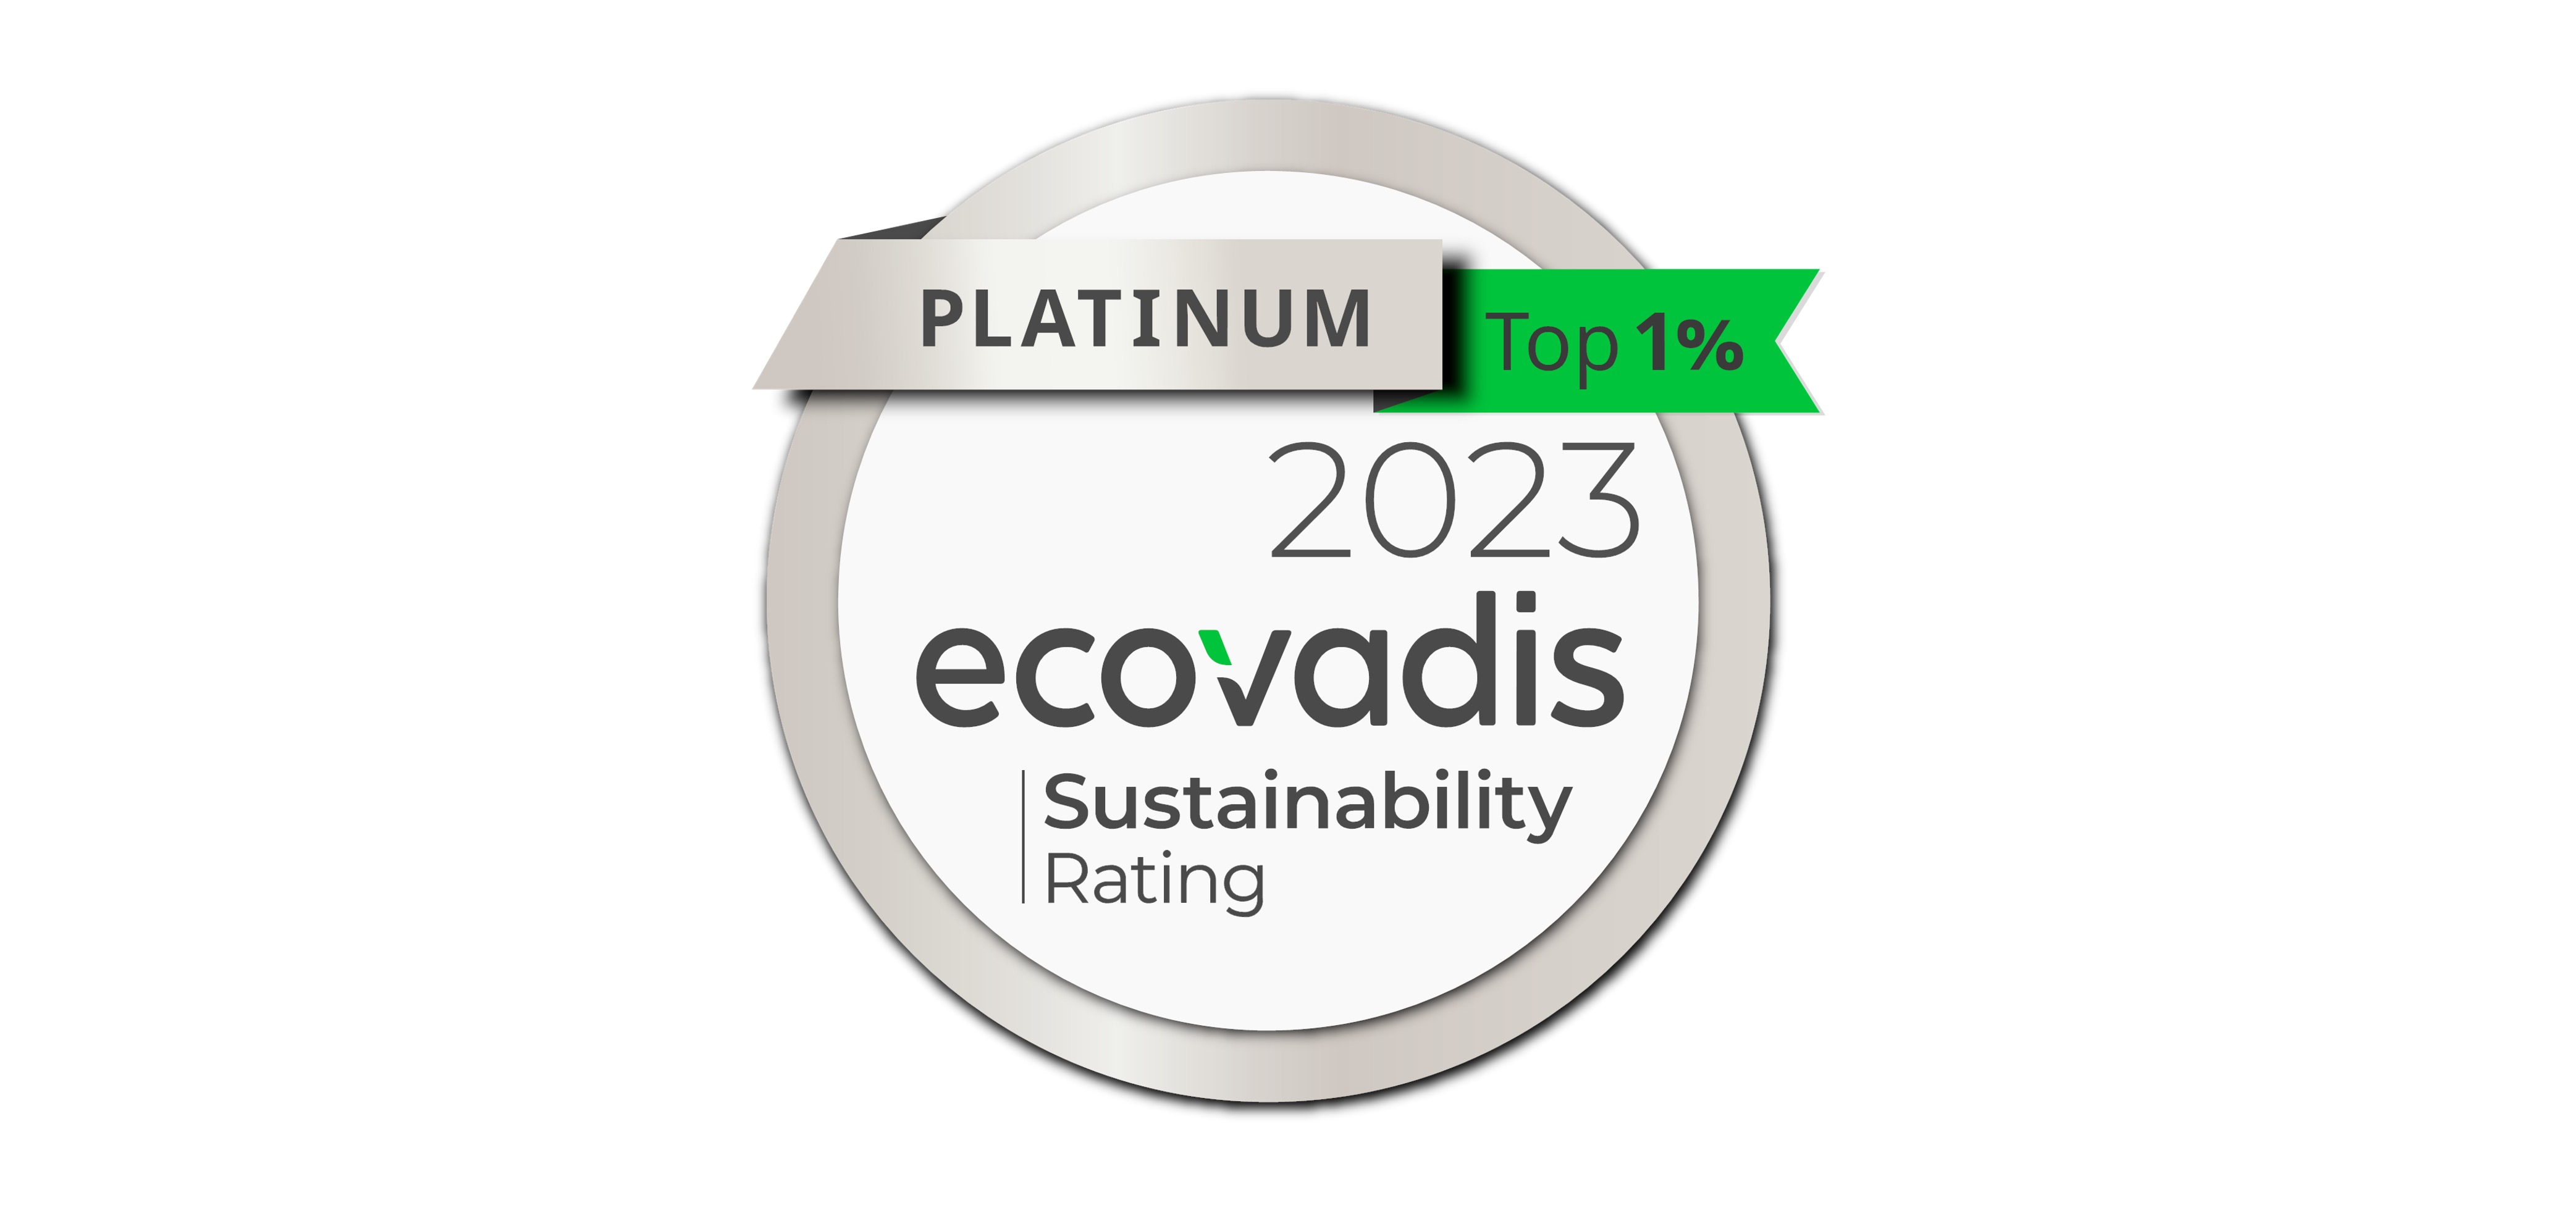 EcoVadis Platinum Award 2023 Top 1% Sustainability